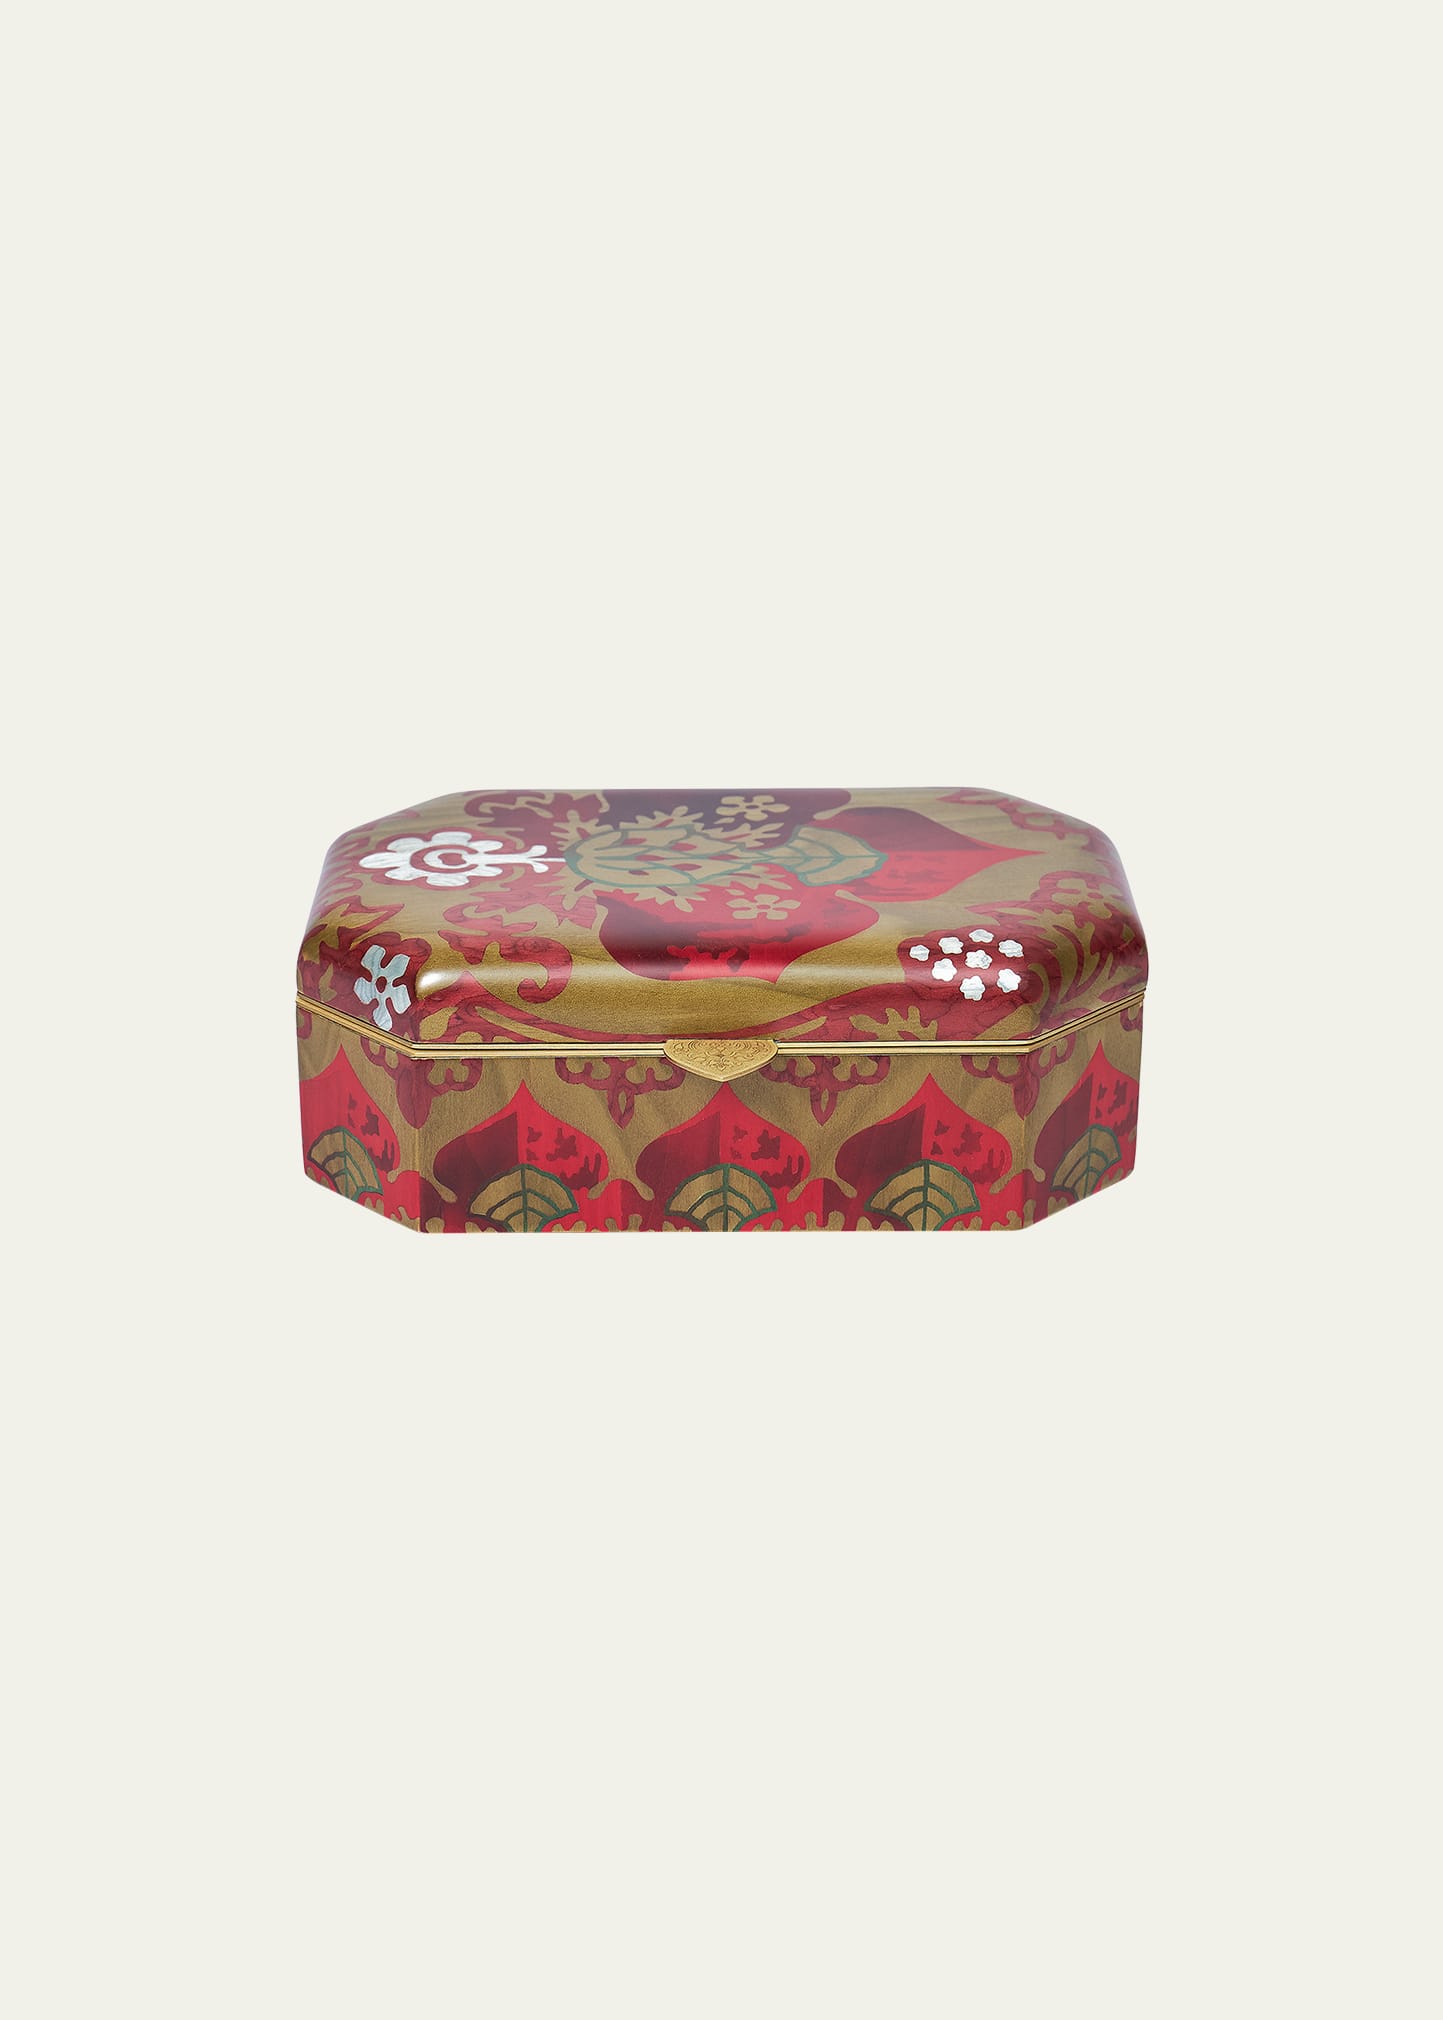 Silk Road Marquetry Box With Venetian Brocade Fabric